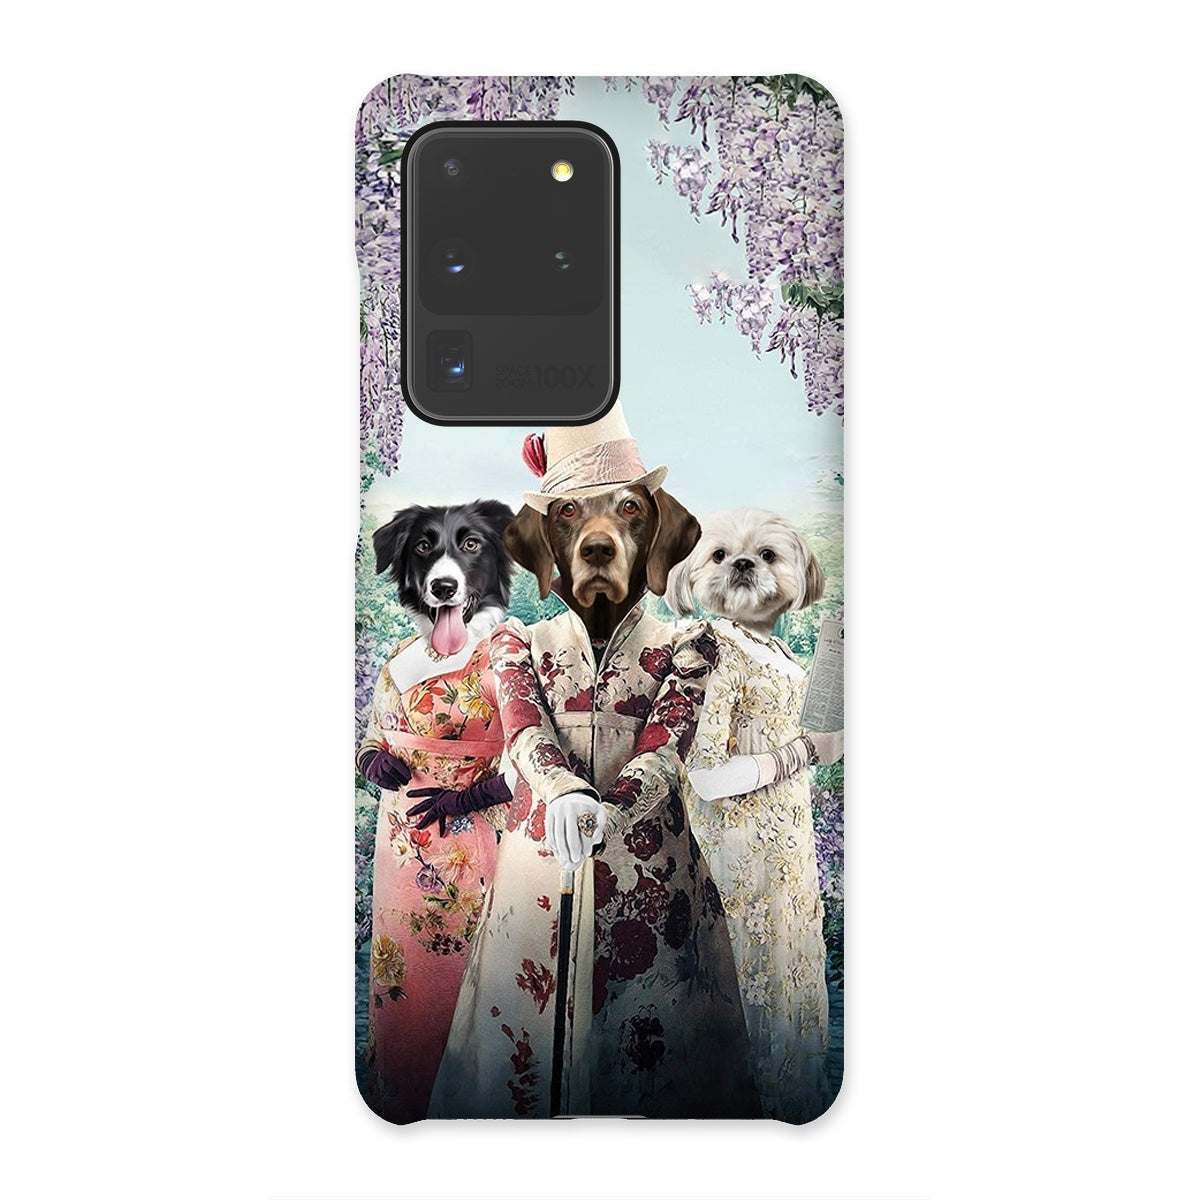 Paw & Glory, pawandglory, phone case dog, personalized pet phone case, custom dog phone case, pet art phone case uk, pet portrait phone case,